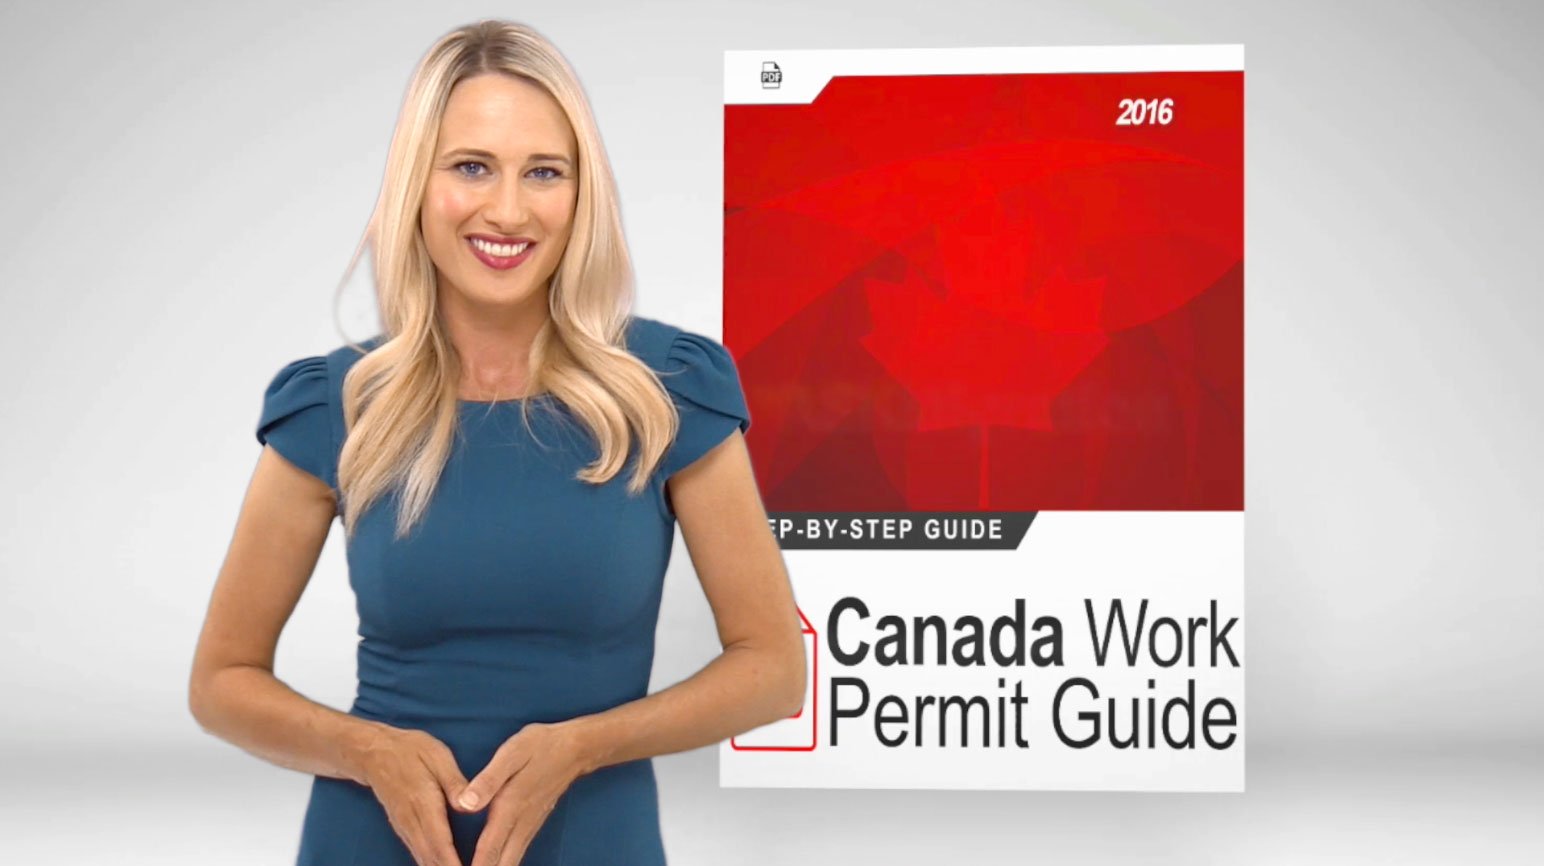 Canada Work Permit Guide (2016)